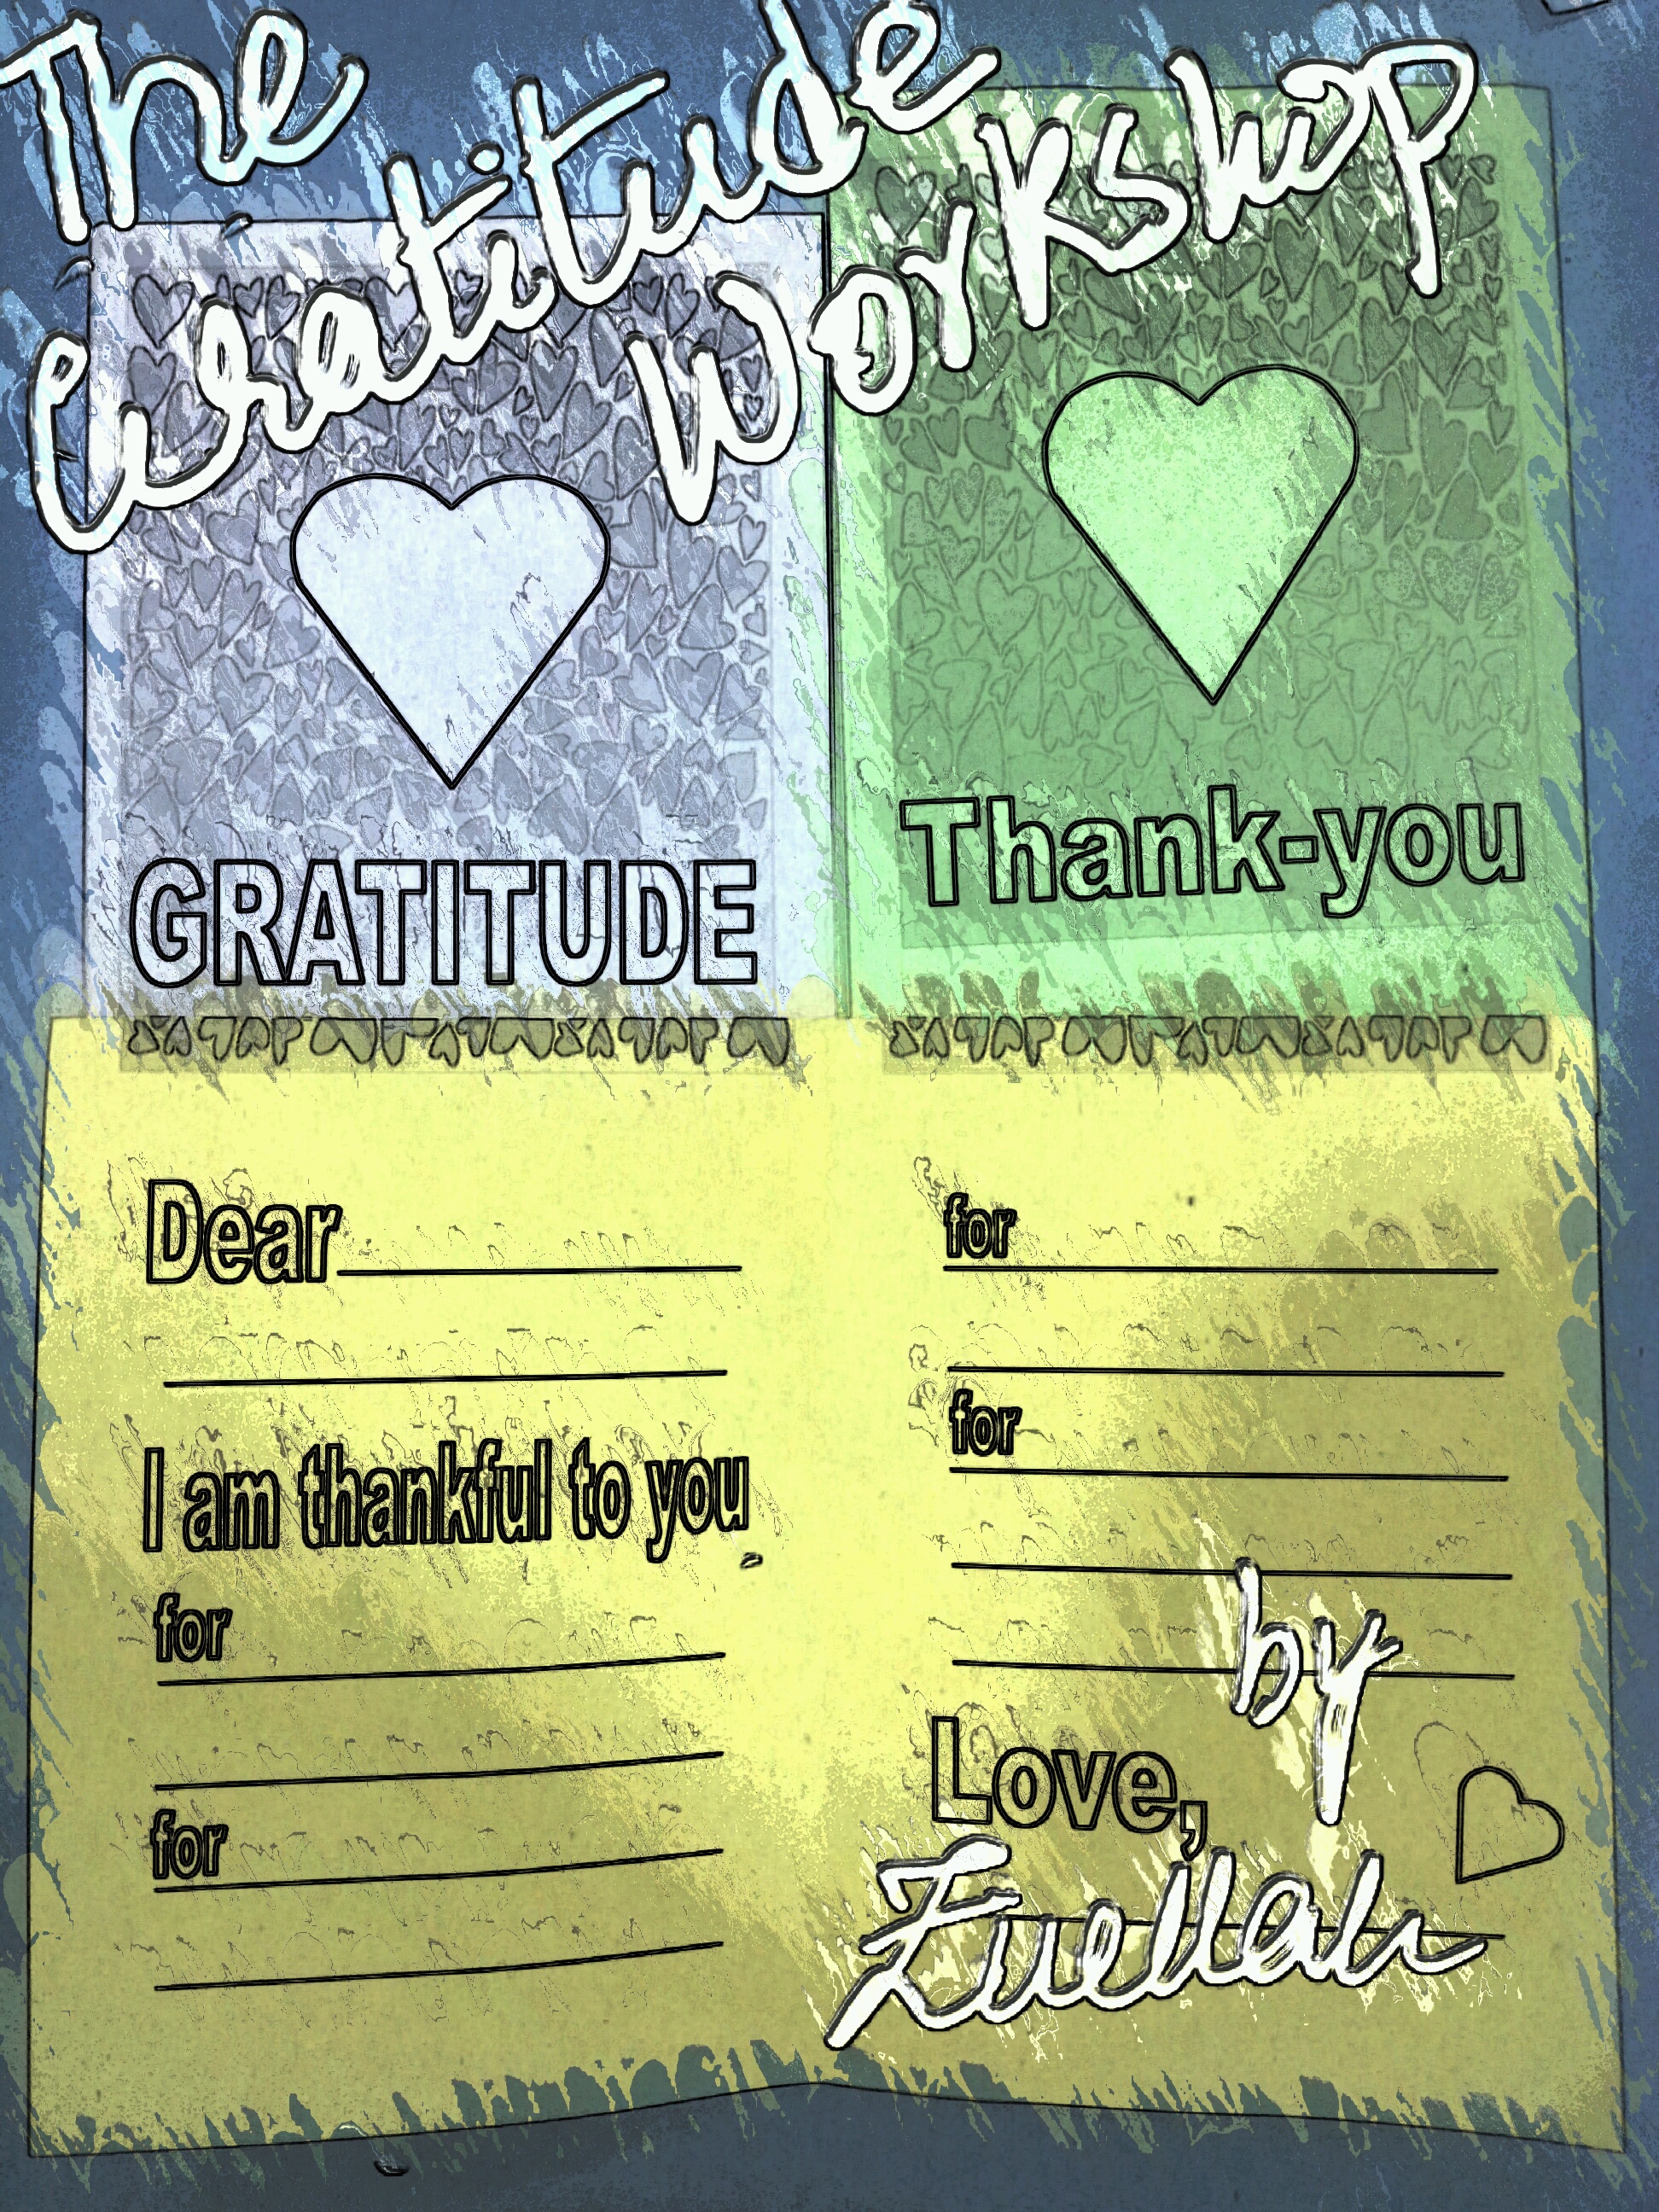 Gratitude Workshop